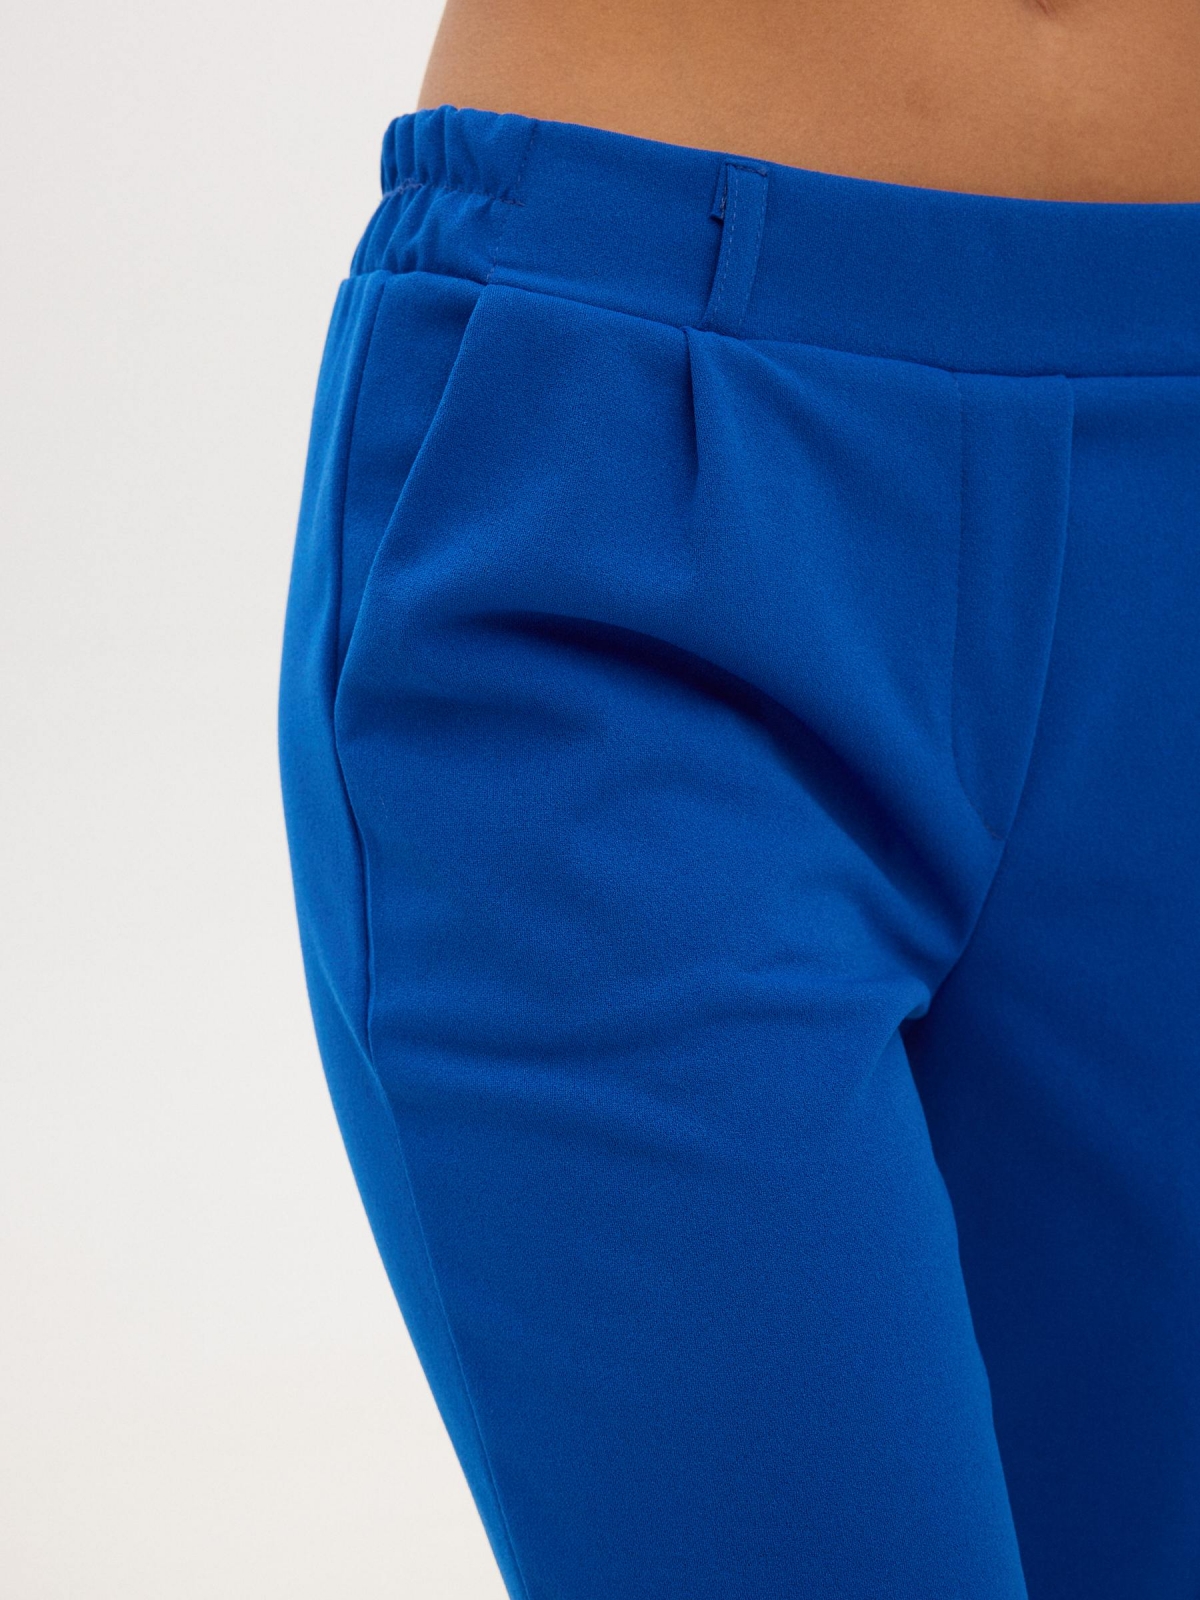 Jogger pants blue detail view